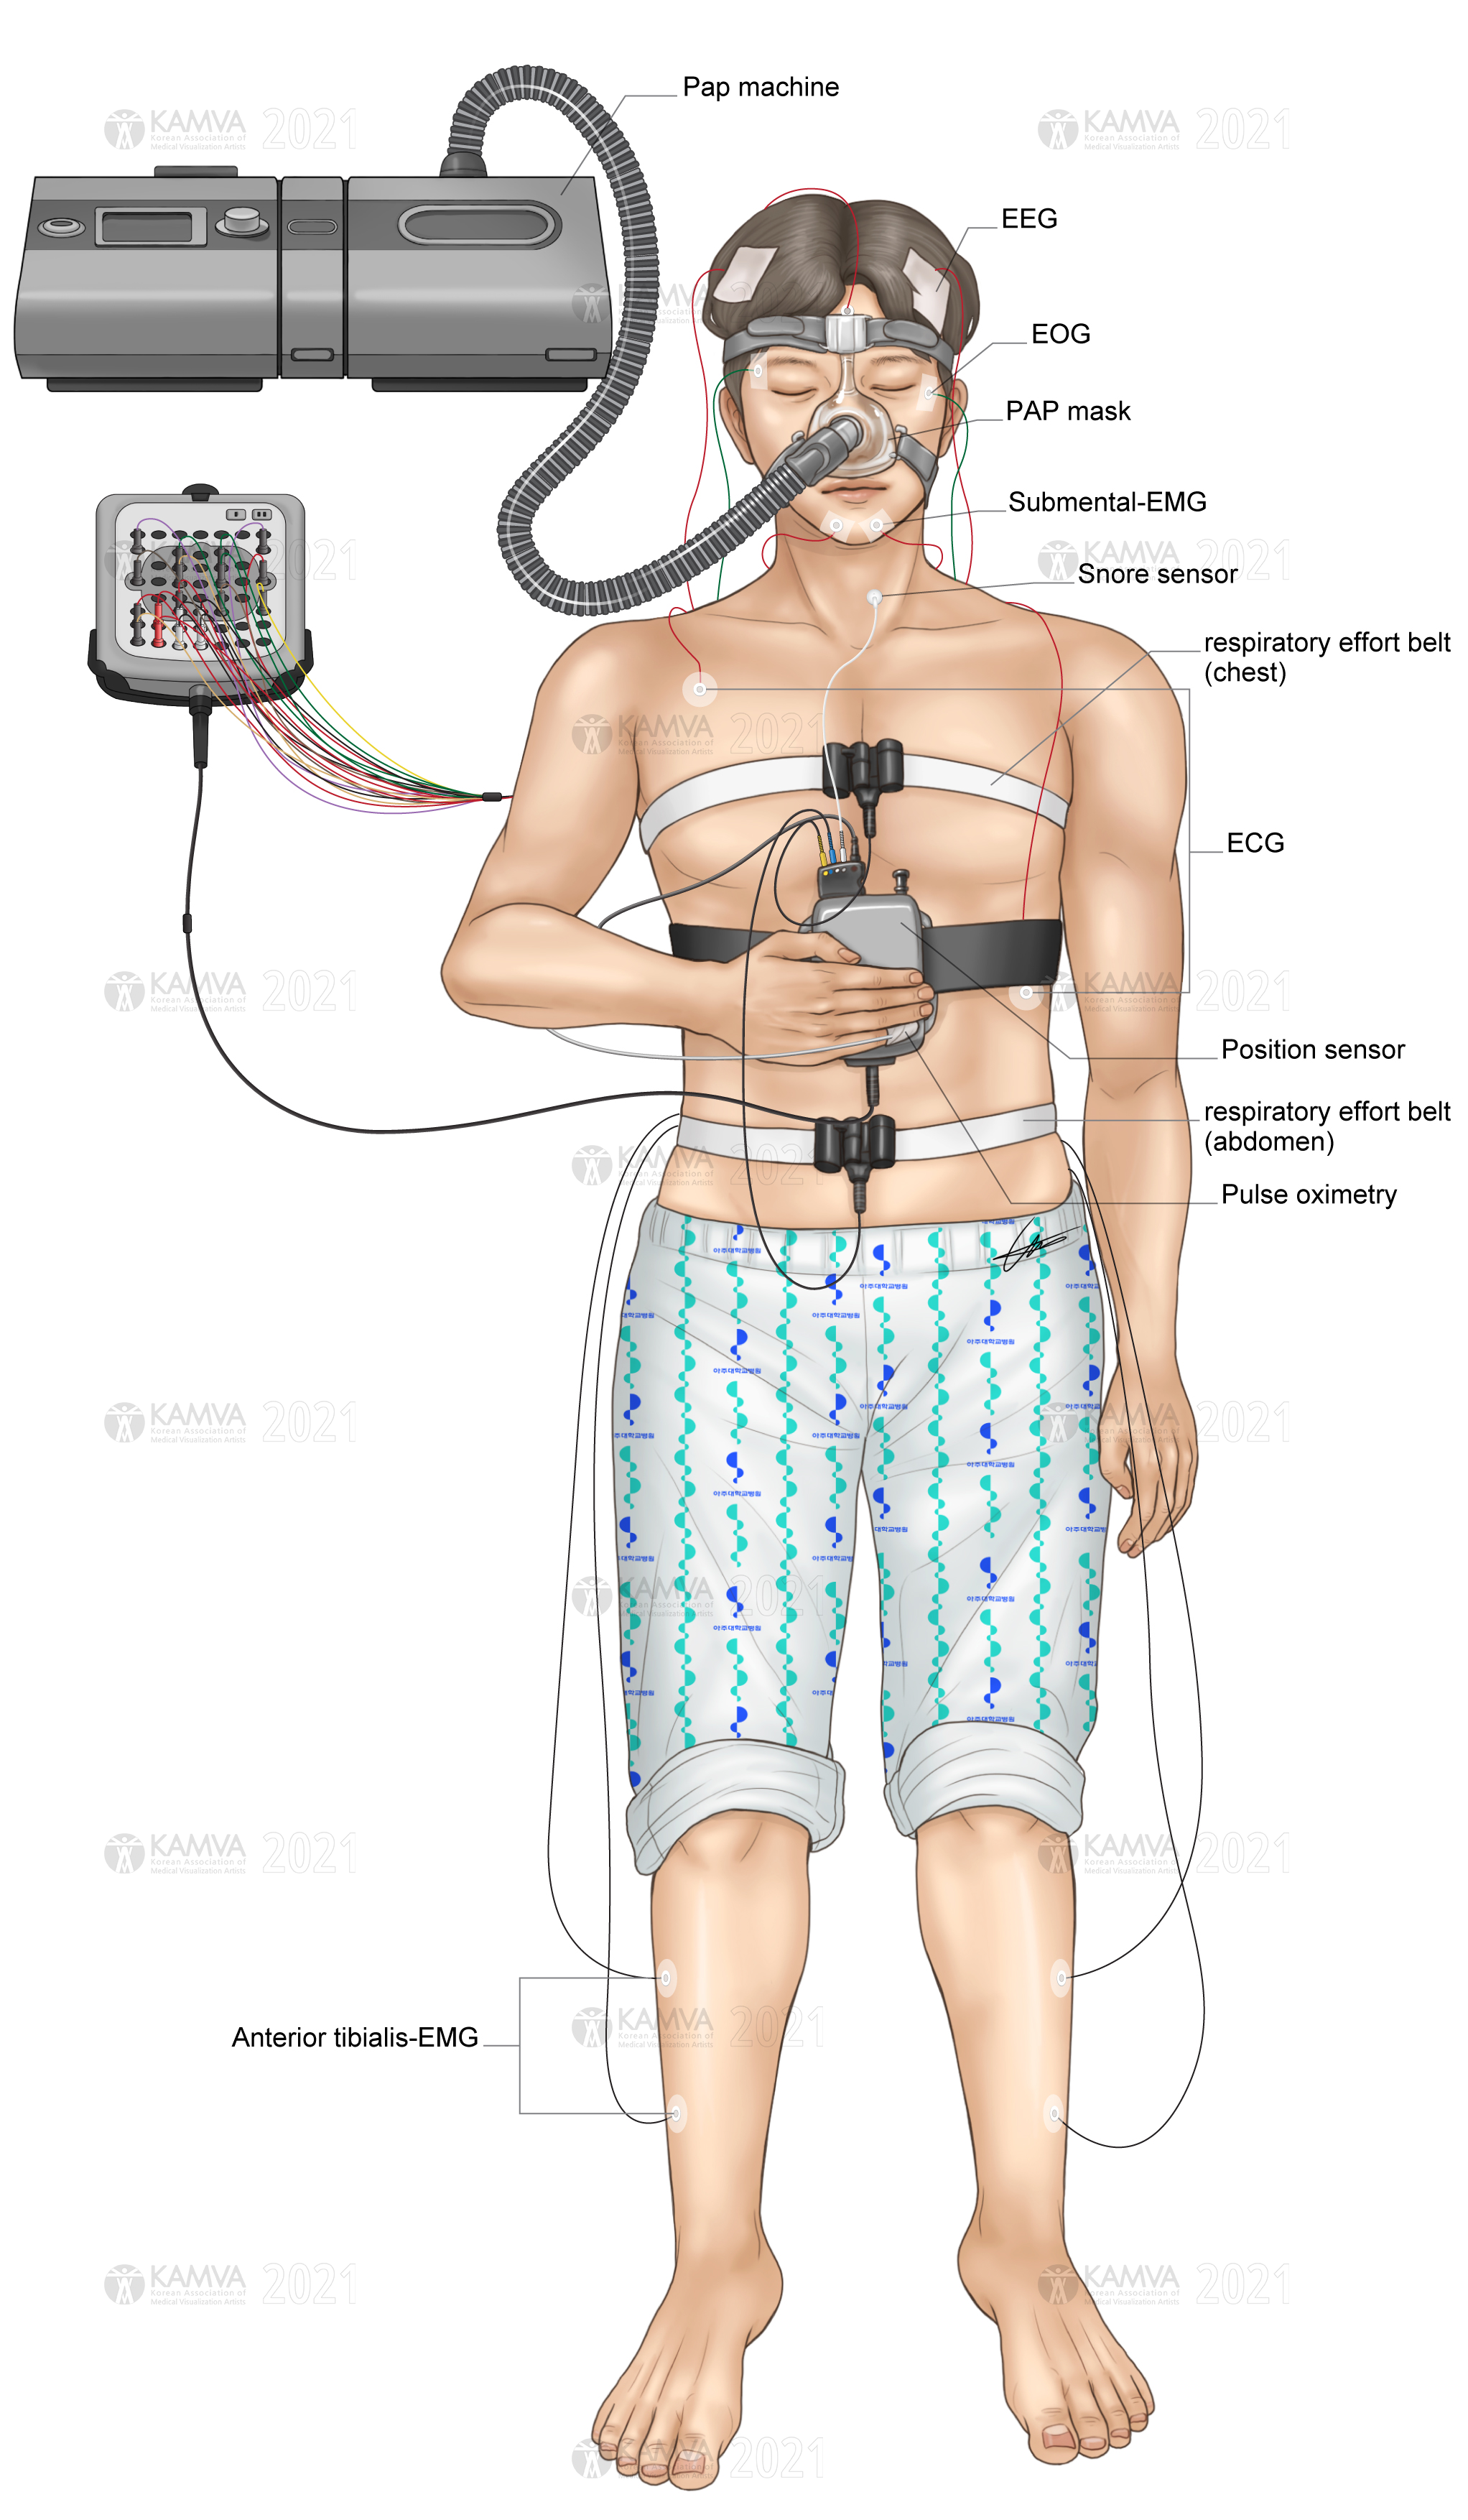 P-조우현_Description of pap machine for breathing.jpg